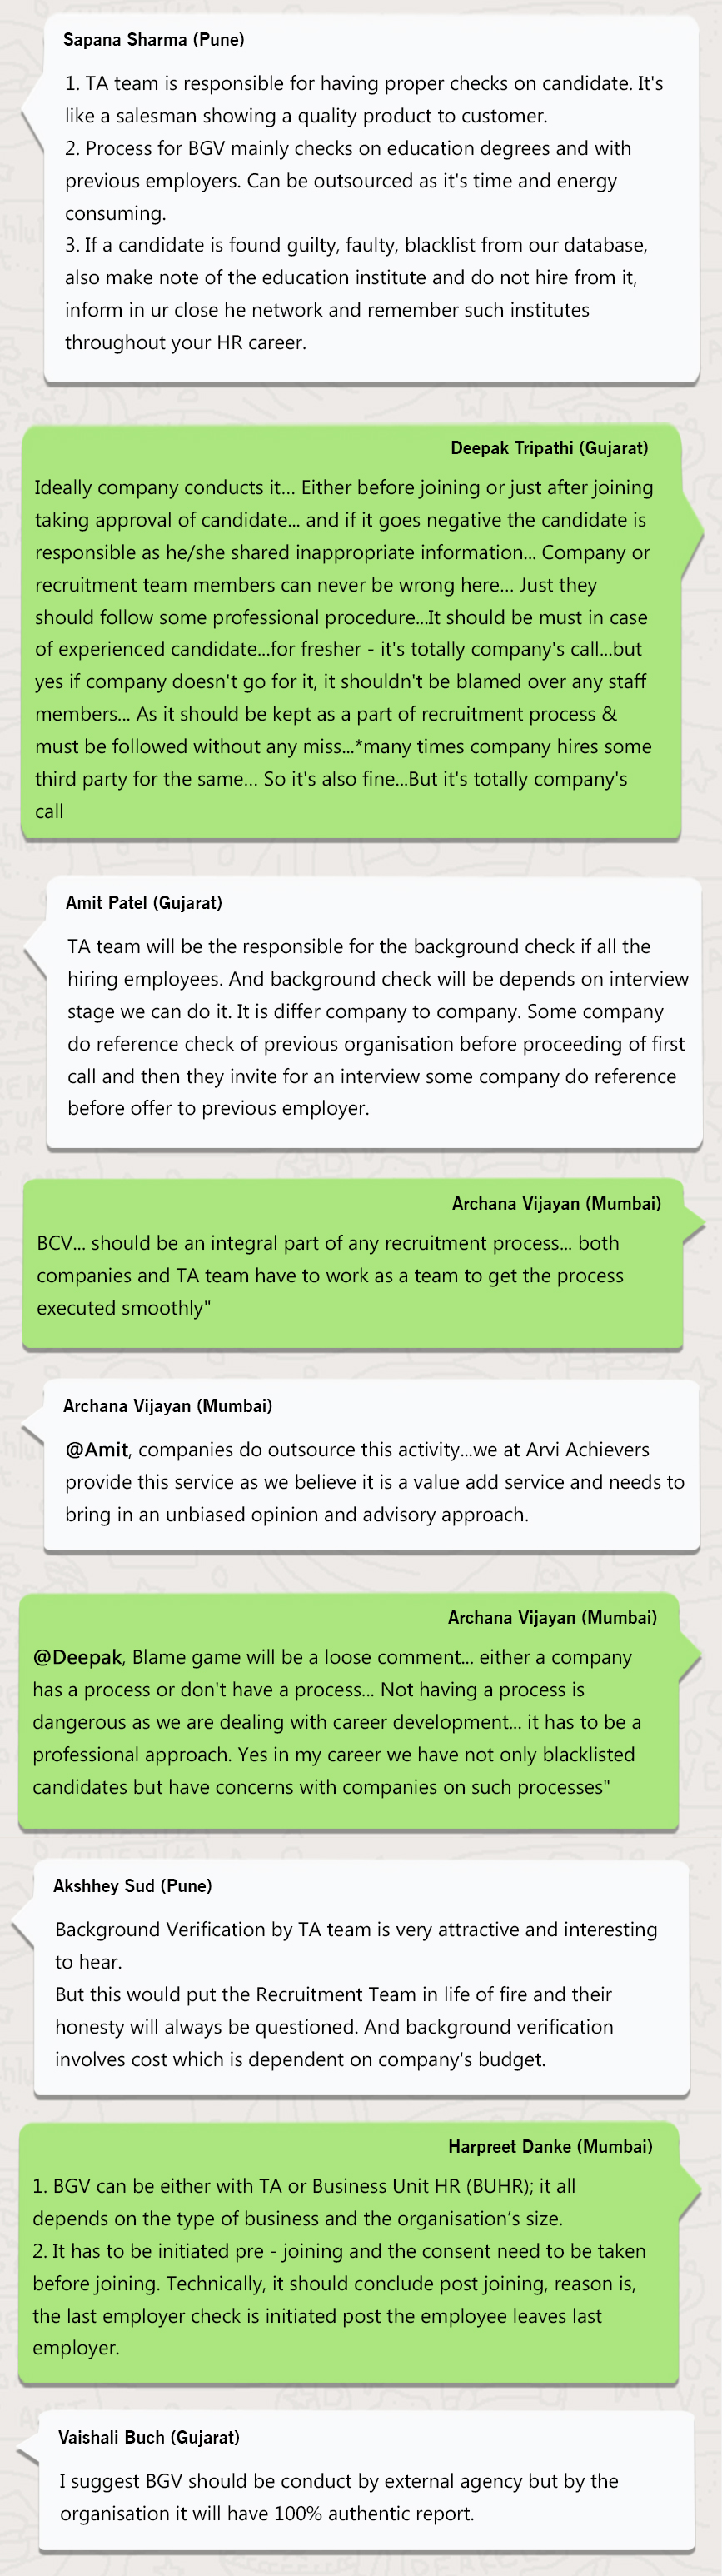 WhatsApp Group Chat â€“ Recruitment: Background Verification (BGV) Process